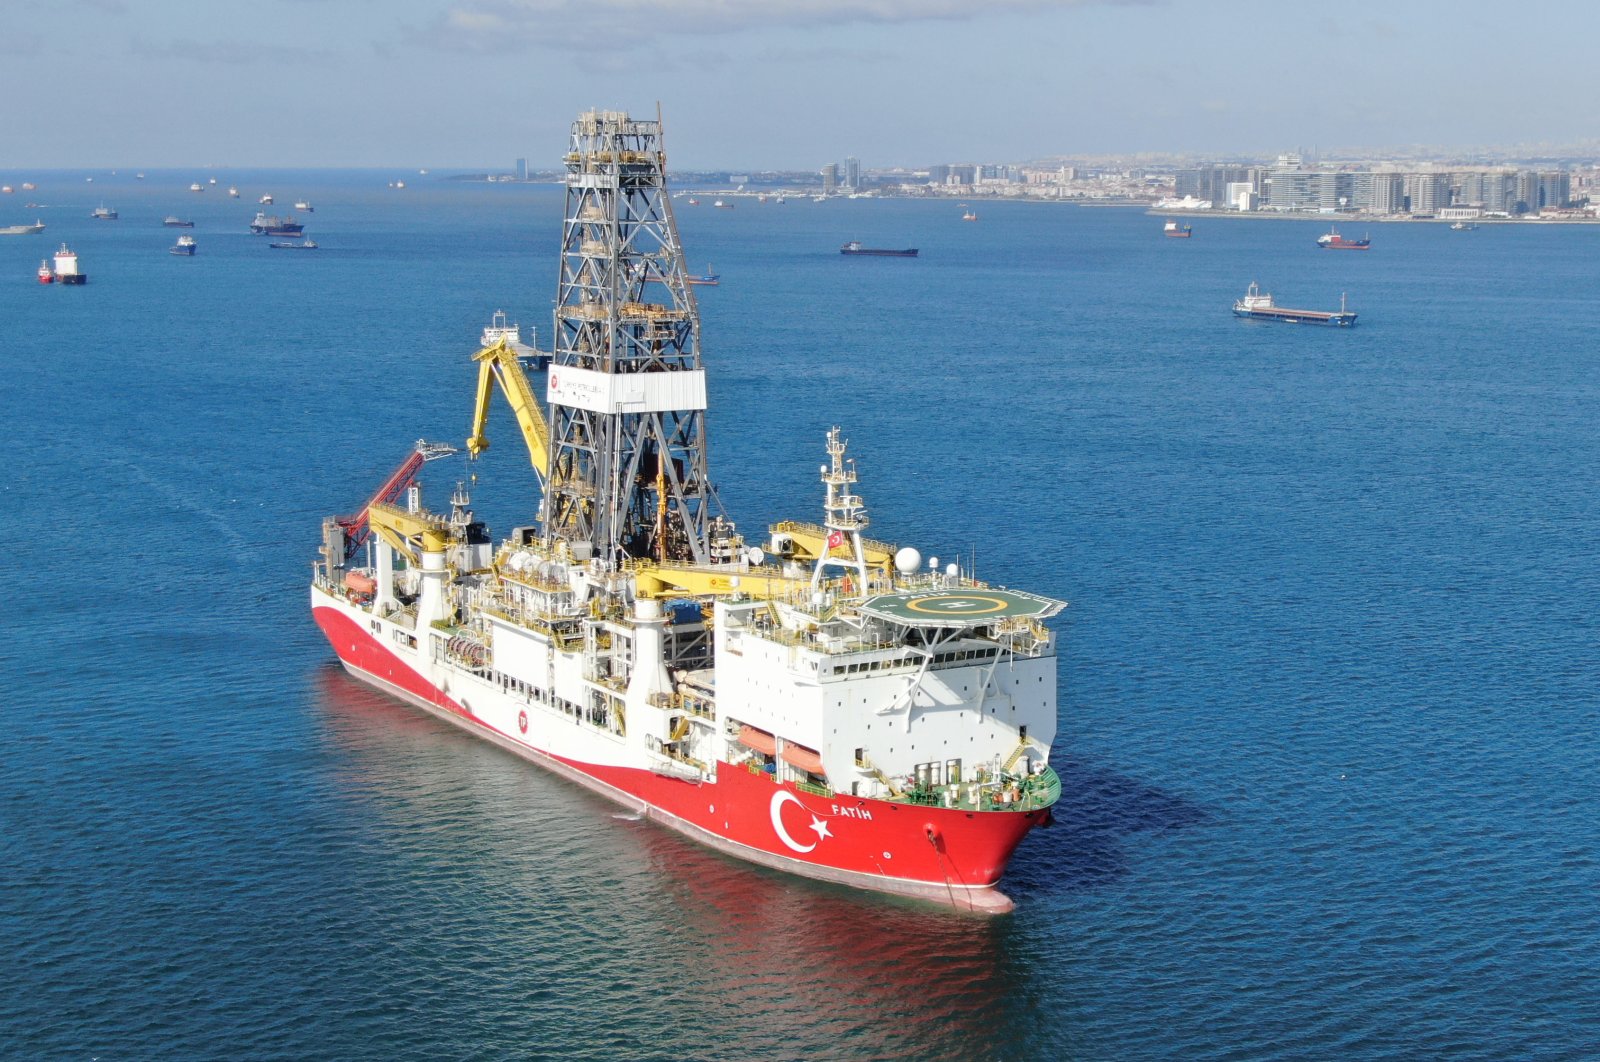 Turkey's Fatih drillship seen off the shores of Istanbul, Turkey, April 9, 2020. (AA Photo)